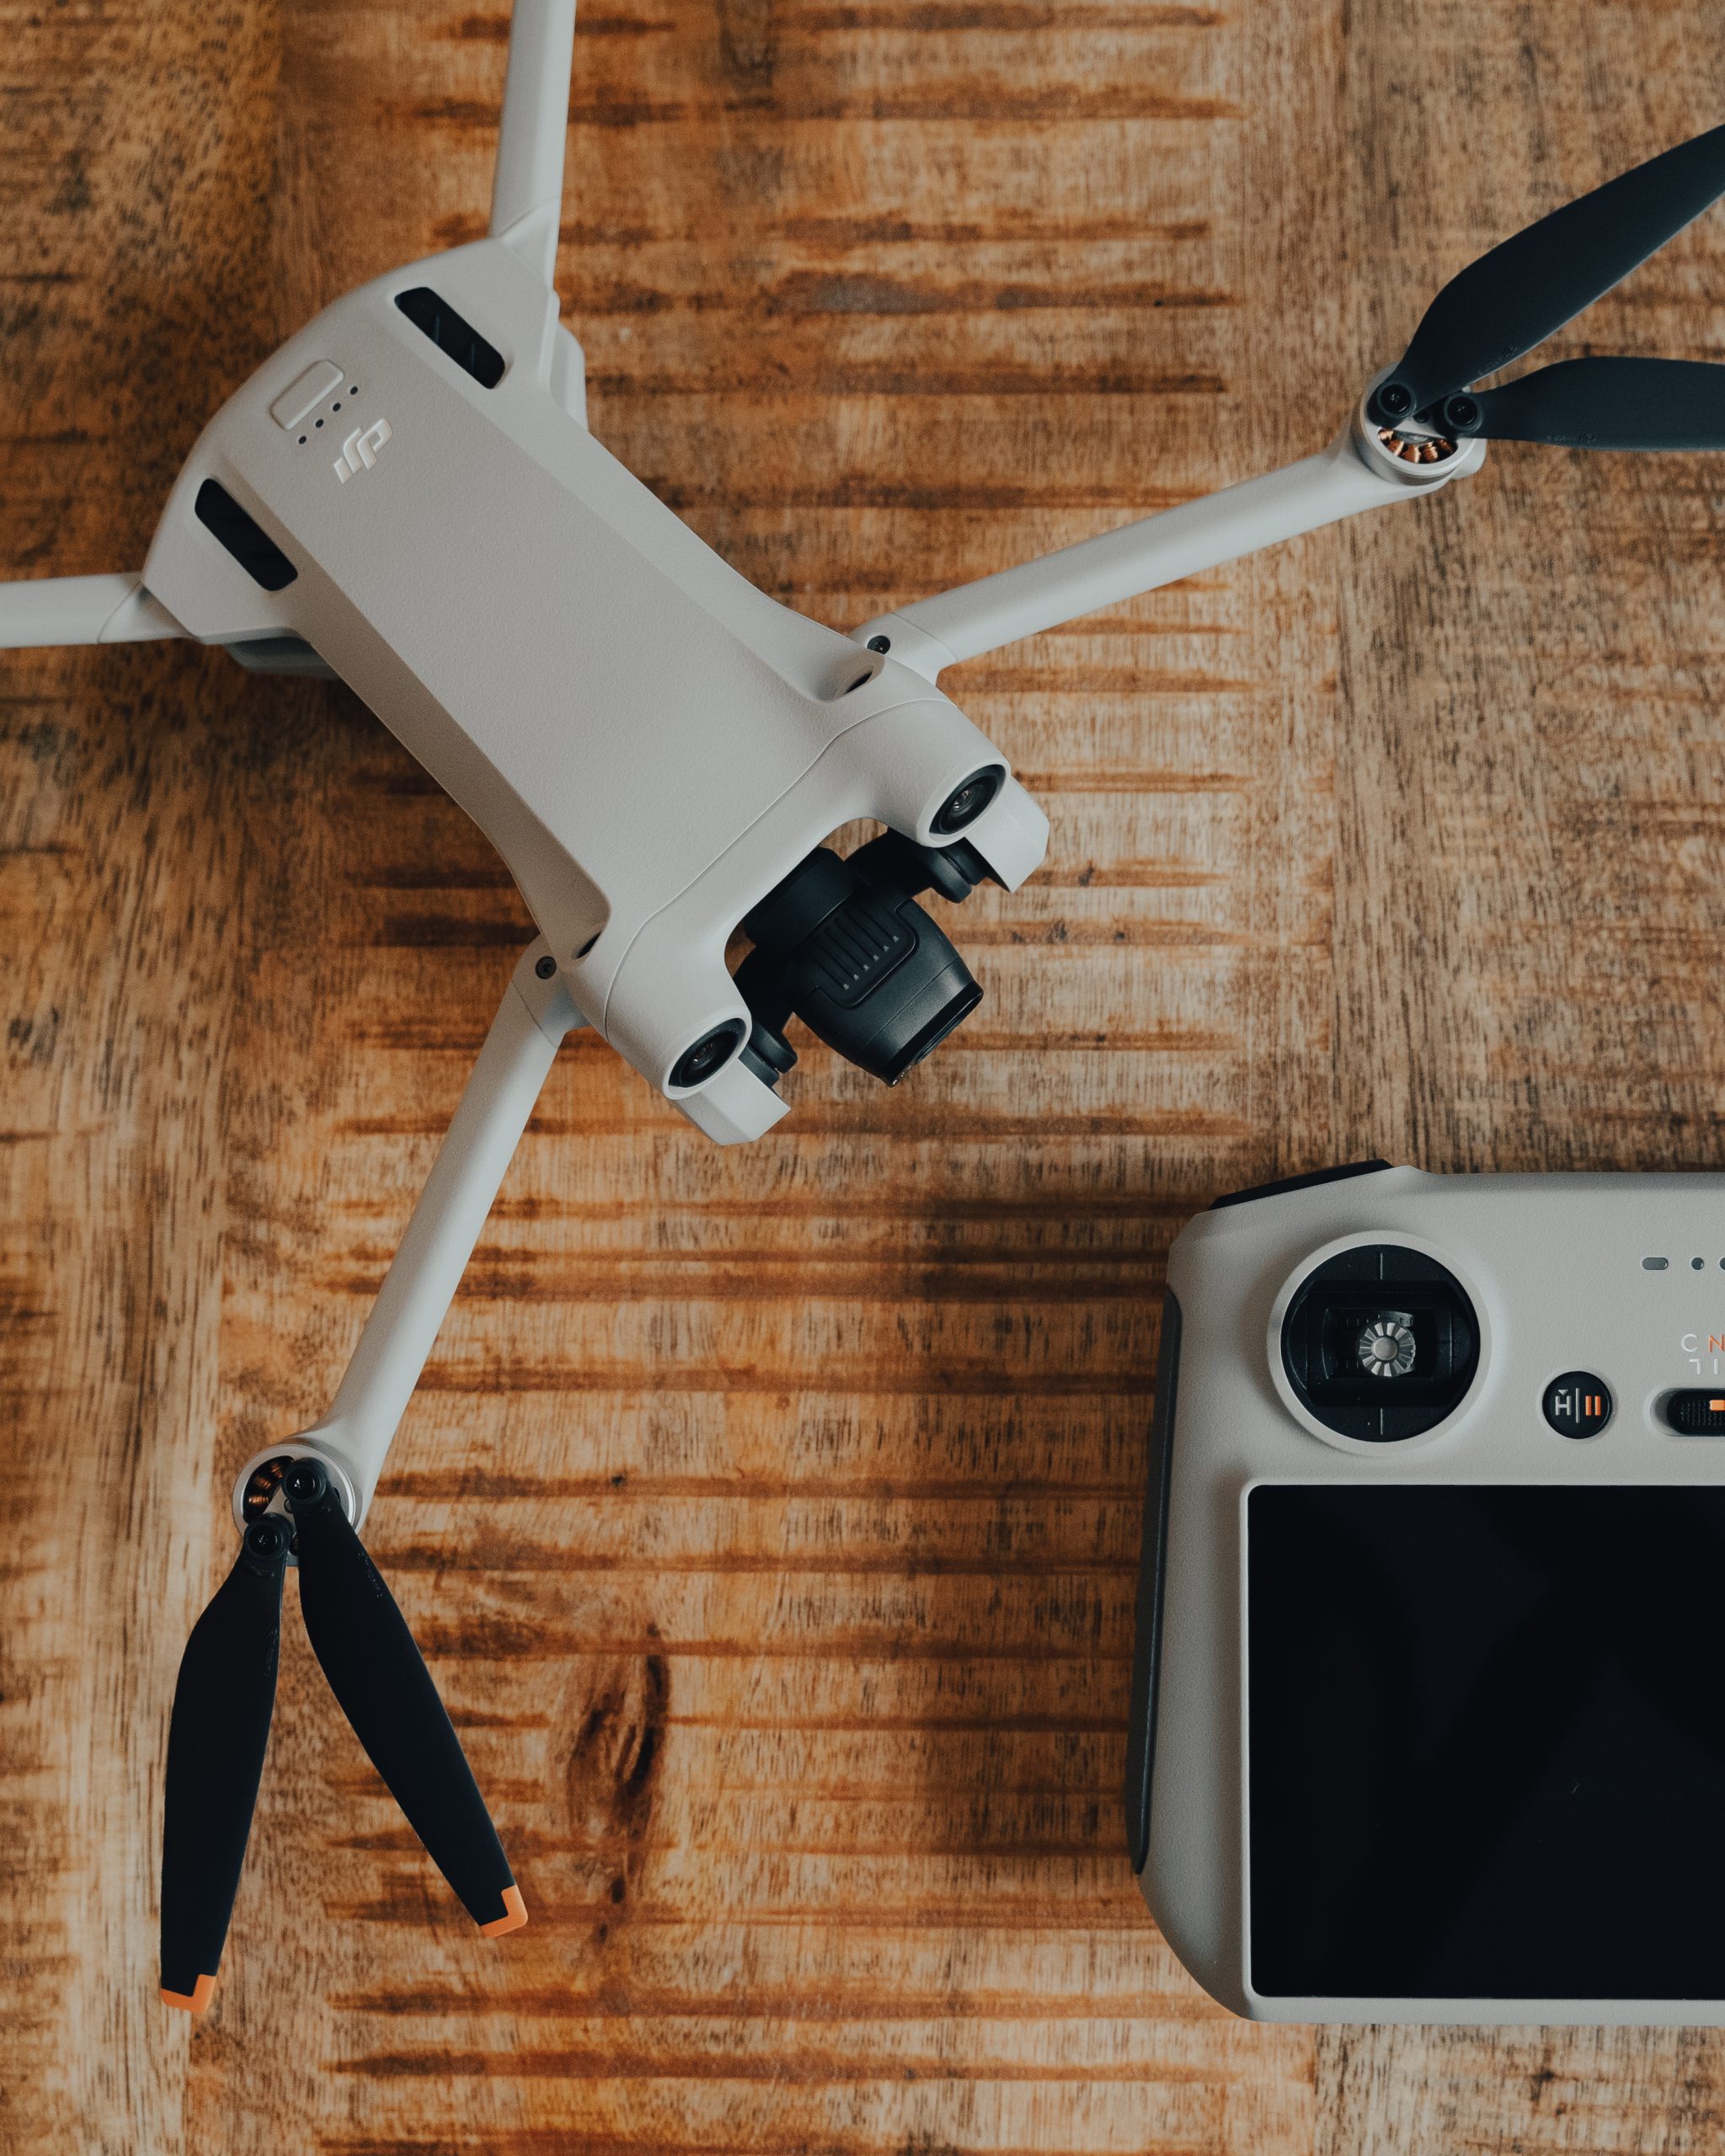 DJI Mobile SDK adds support for Mini 3, Mini 3 Pro drones